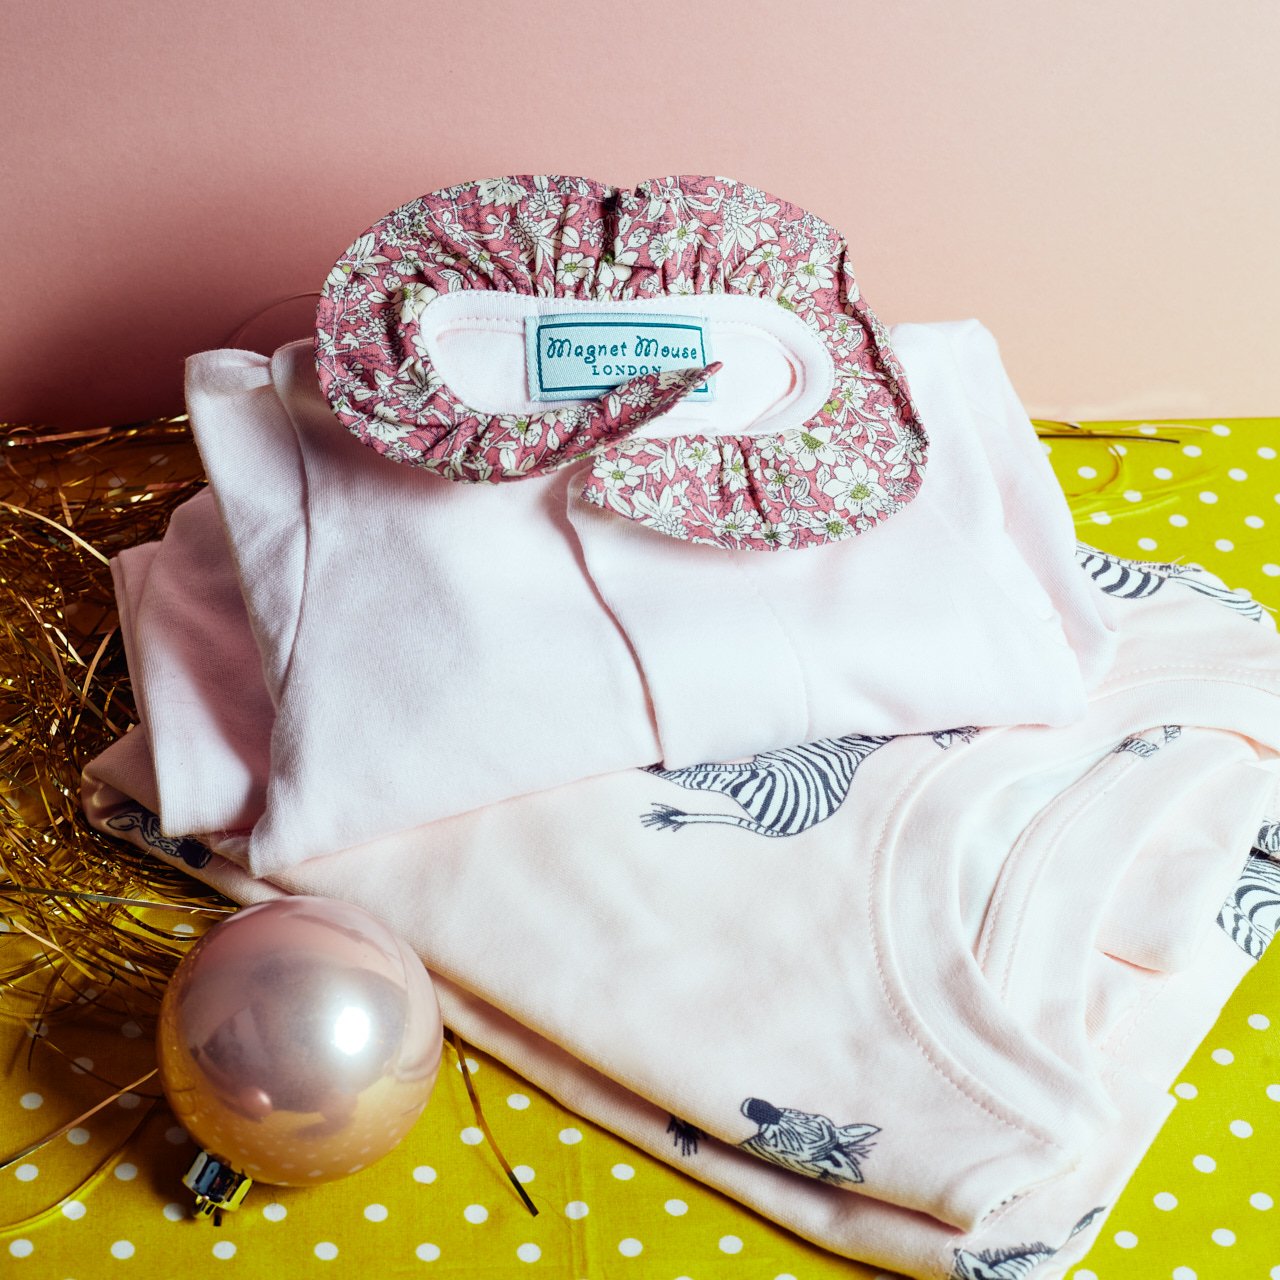  TIFFY &amp; TALULAH  Zebra Zzz's Mini Pyjama Set  £26.00  MAGNET MOUSE  Pale Pink Ruffle Onesie  £24.95     